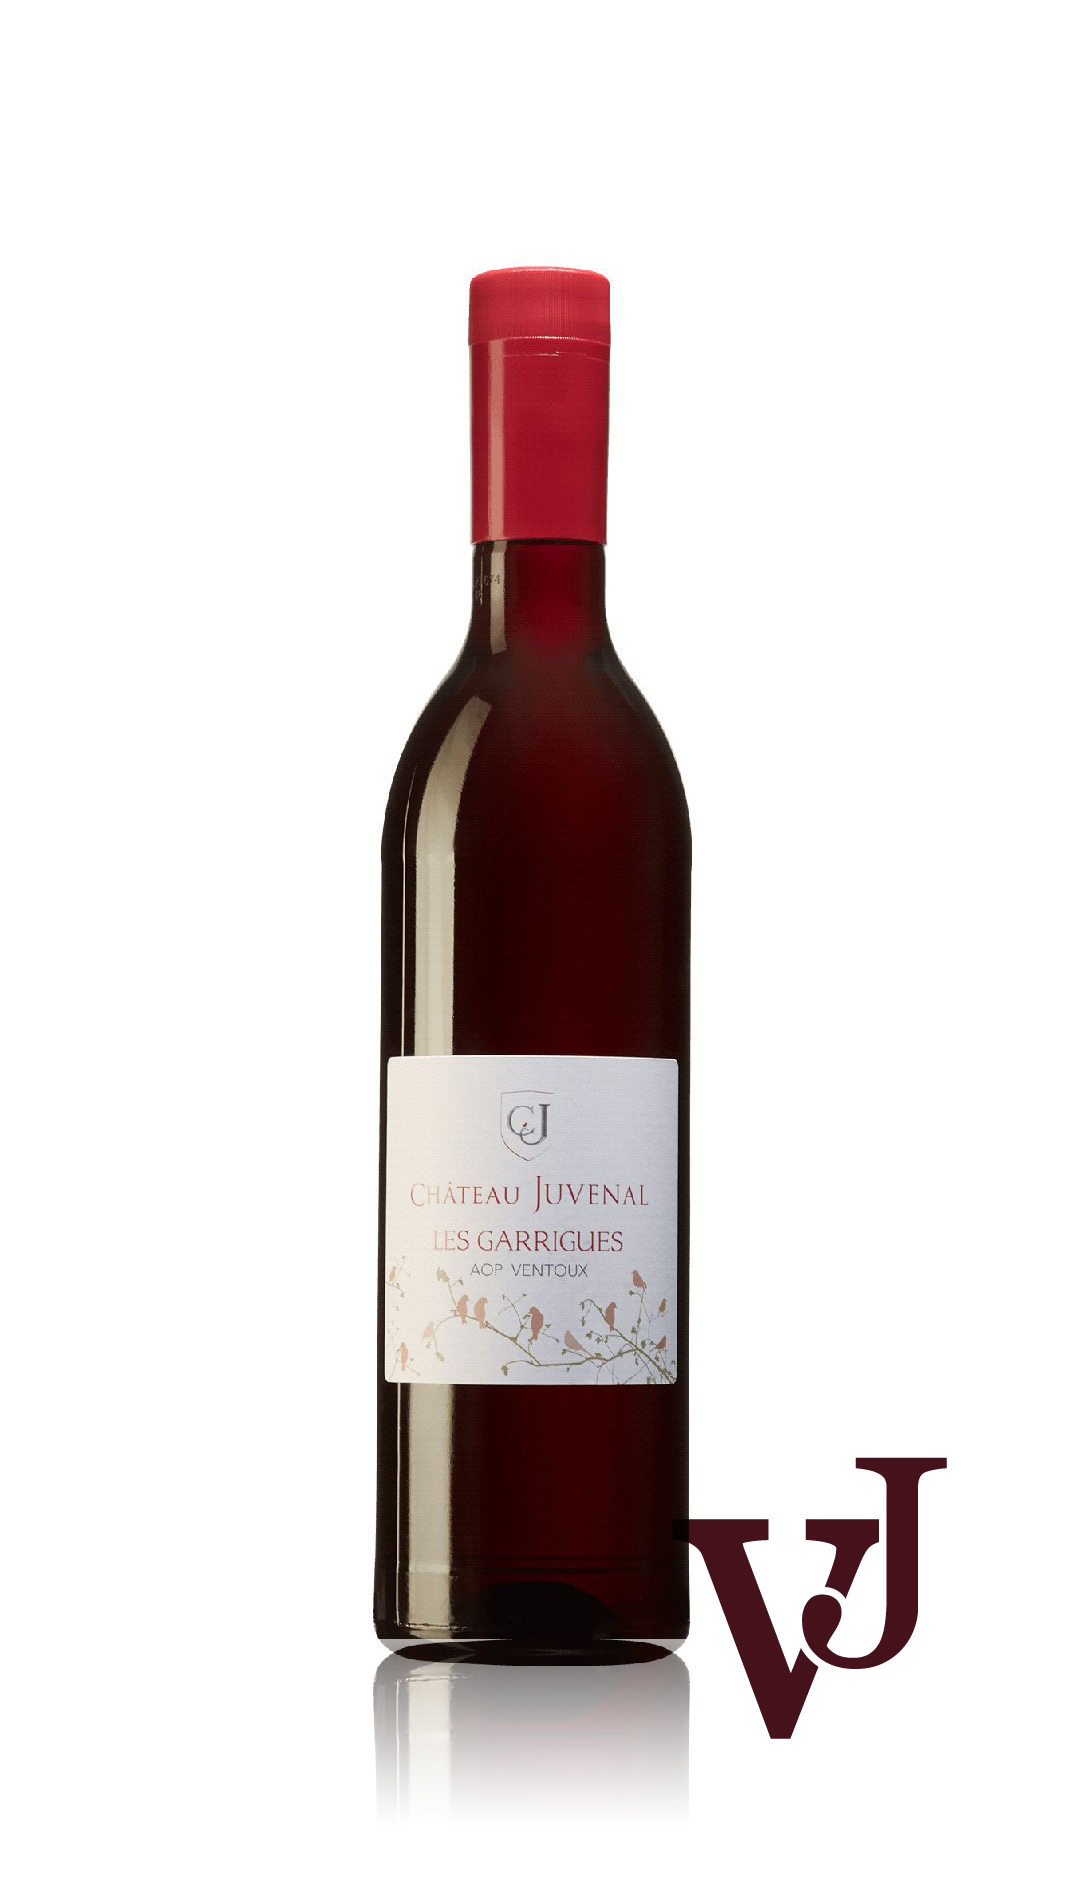 Rött Vin - Château Juvenal Les Garrigues artikel nummer 247201 från producenten SCEA Le Graveyron från området Frankrike